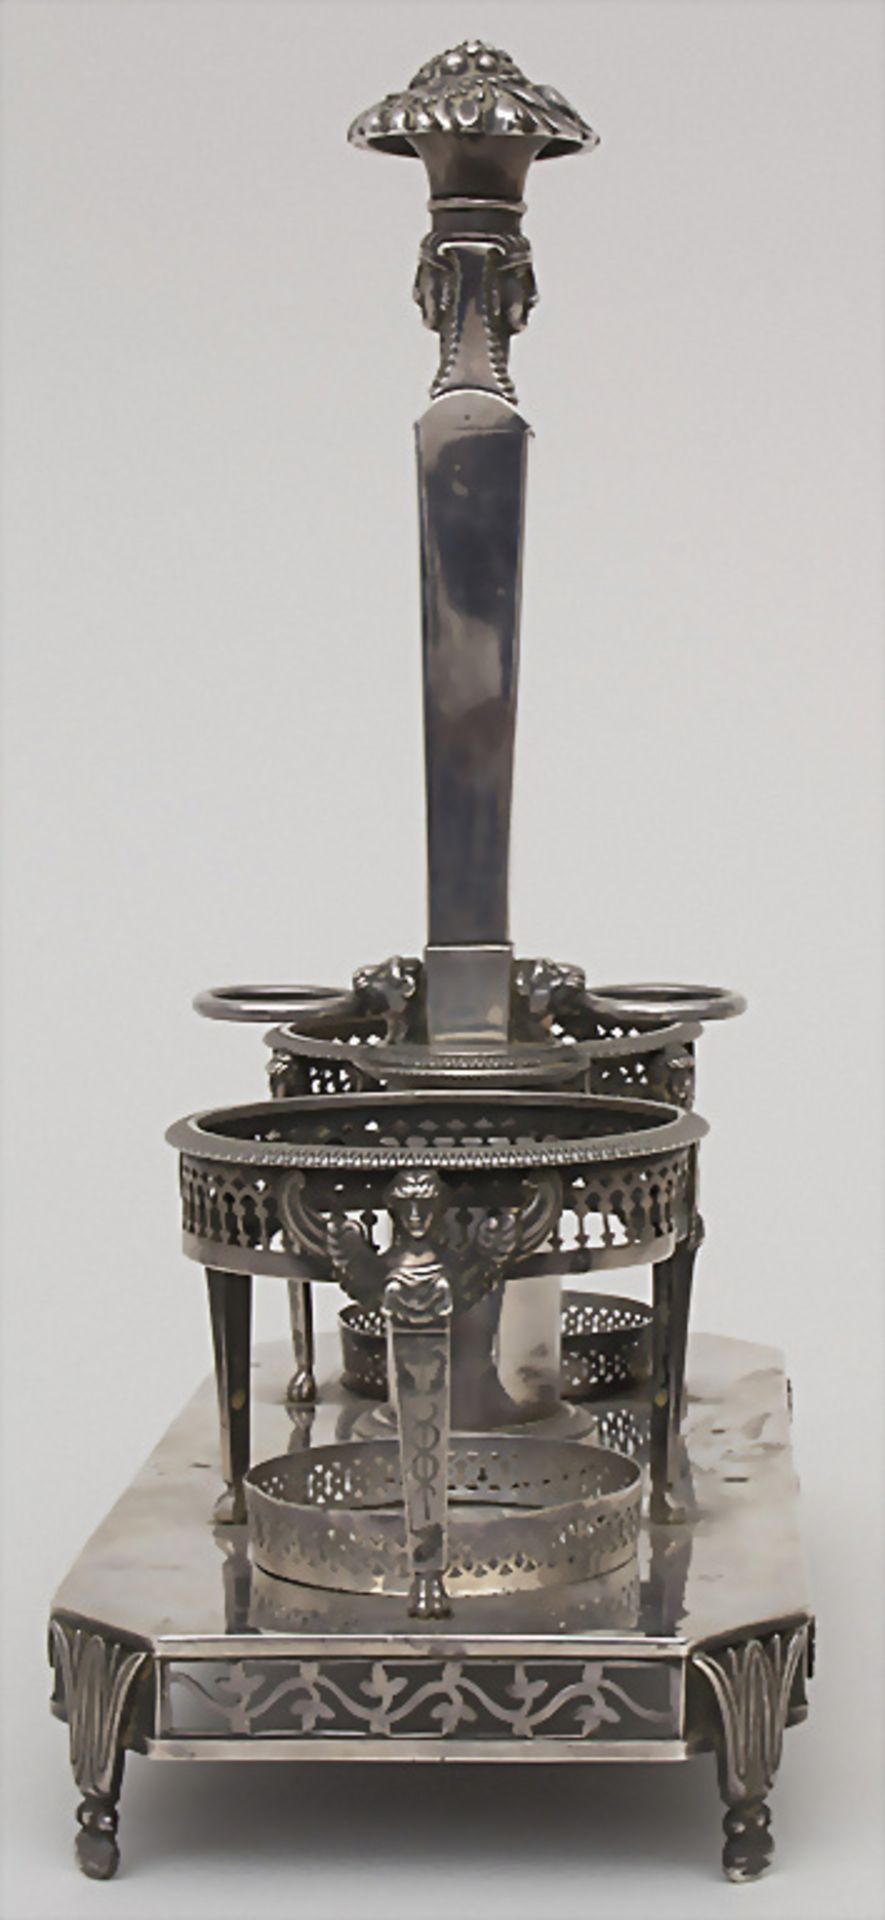 Empire-Huiliere / A silver oil and vinegar cruet set, Paris, 1798-1809 - Image 4 of 8